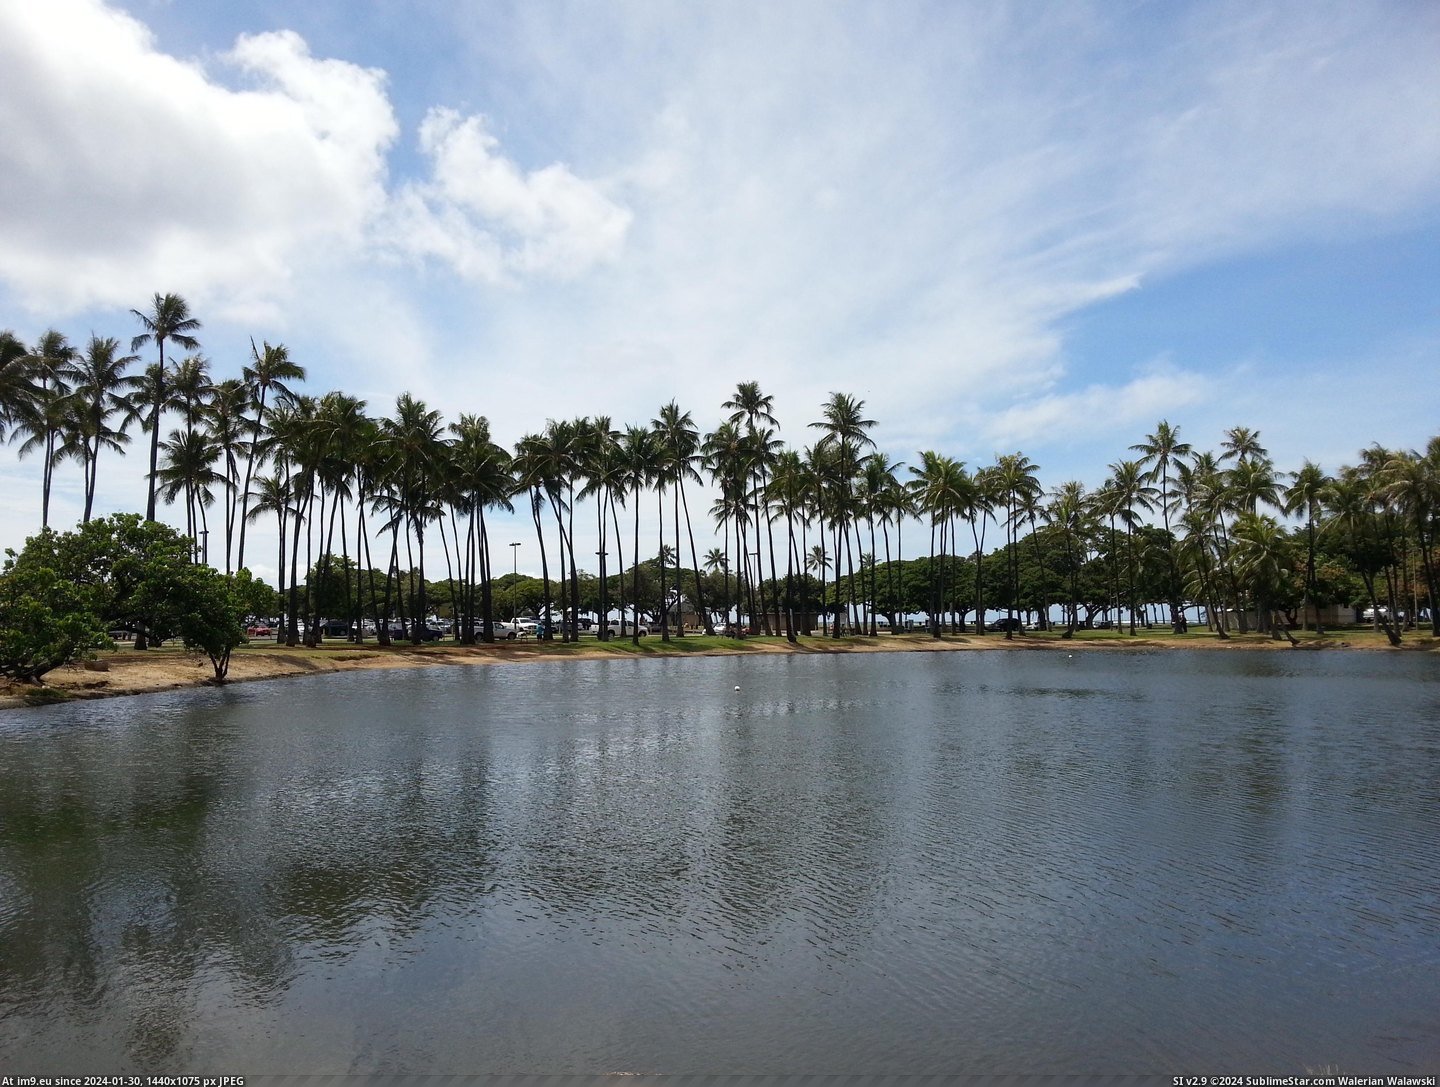  #Image  20131002_115937 Pic. (Bild von album Hawaii))